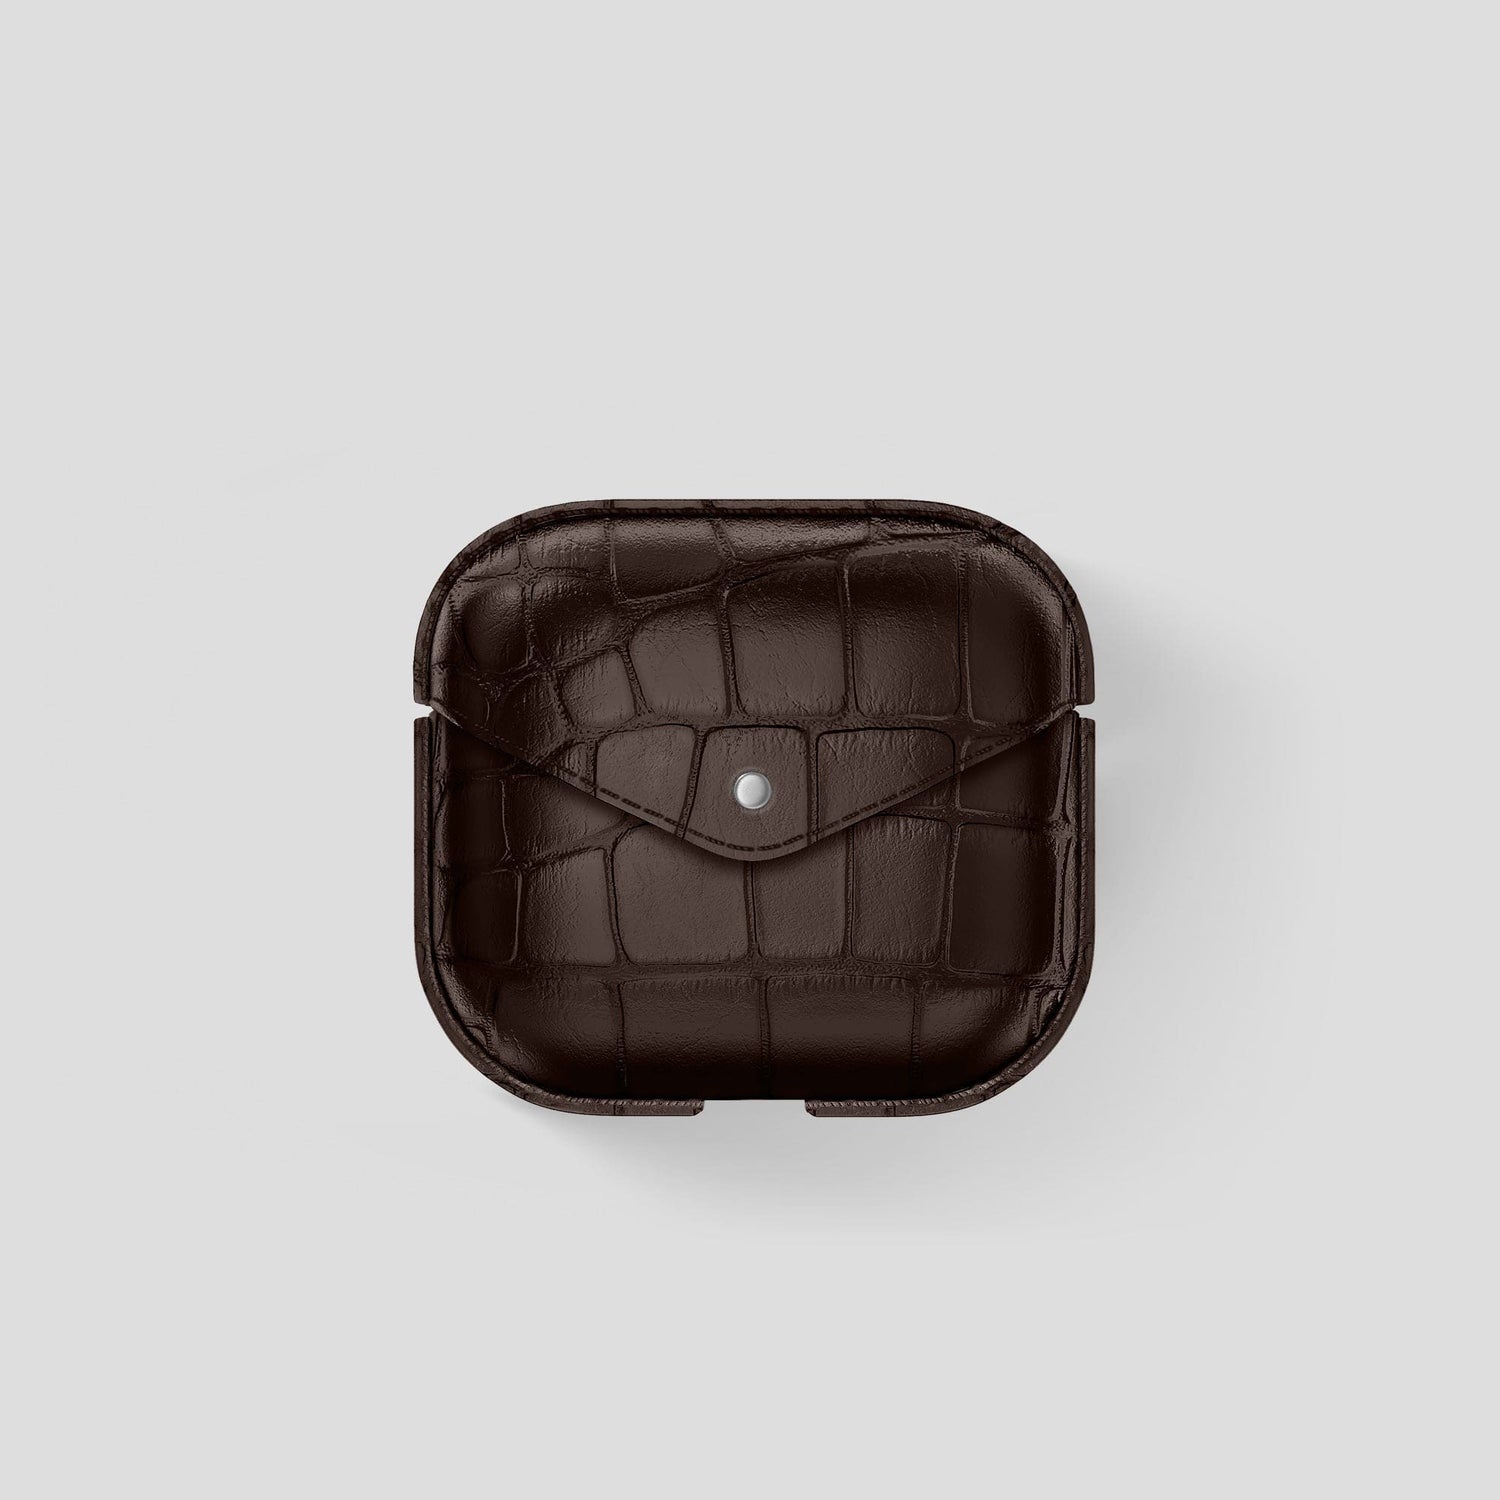 Airpods 3 Louis Vuitton Logo Leather Case - Black